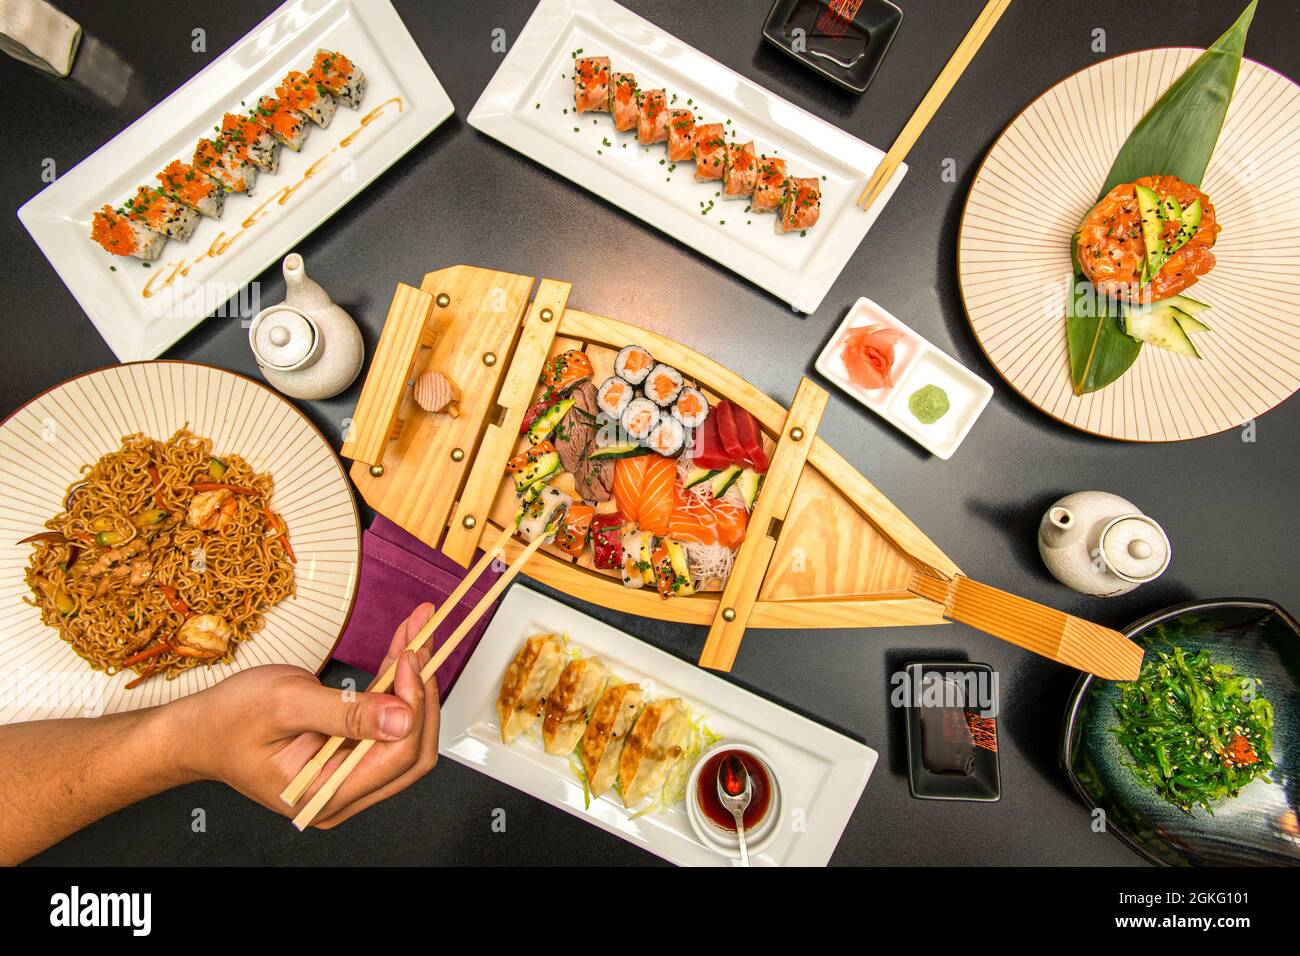 Set of Japanese dishes and sushi on black table. Salmon nigiri, red tuna sashimi, california roll, wakame seaweed salad, parlor tartare with avocado, Stock Photo